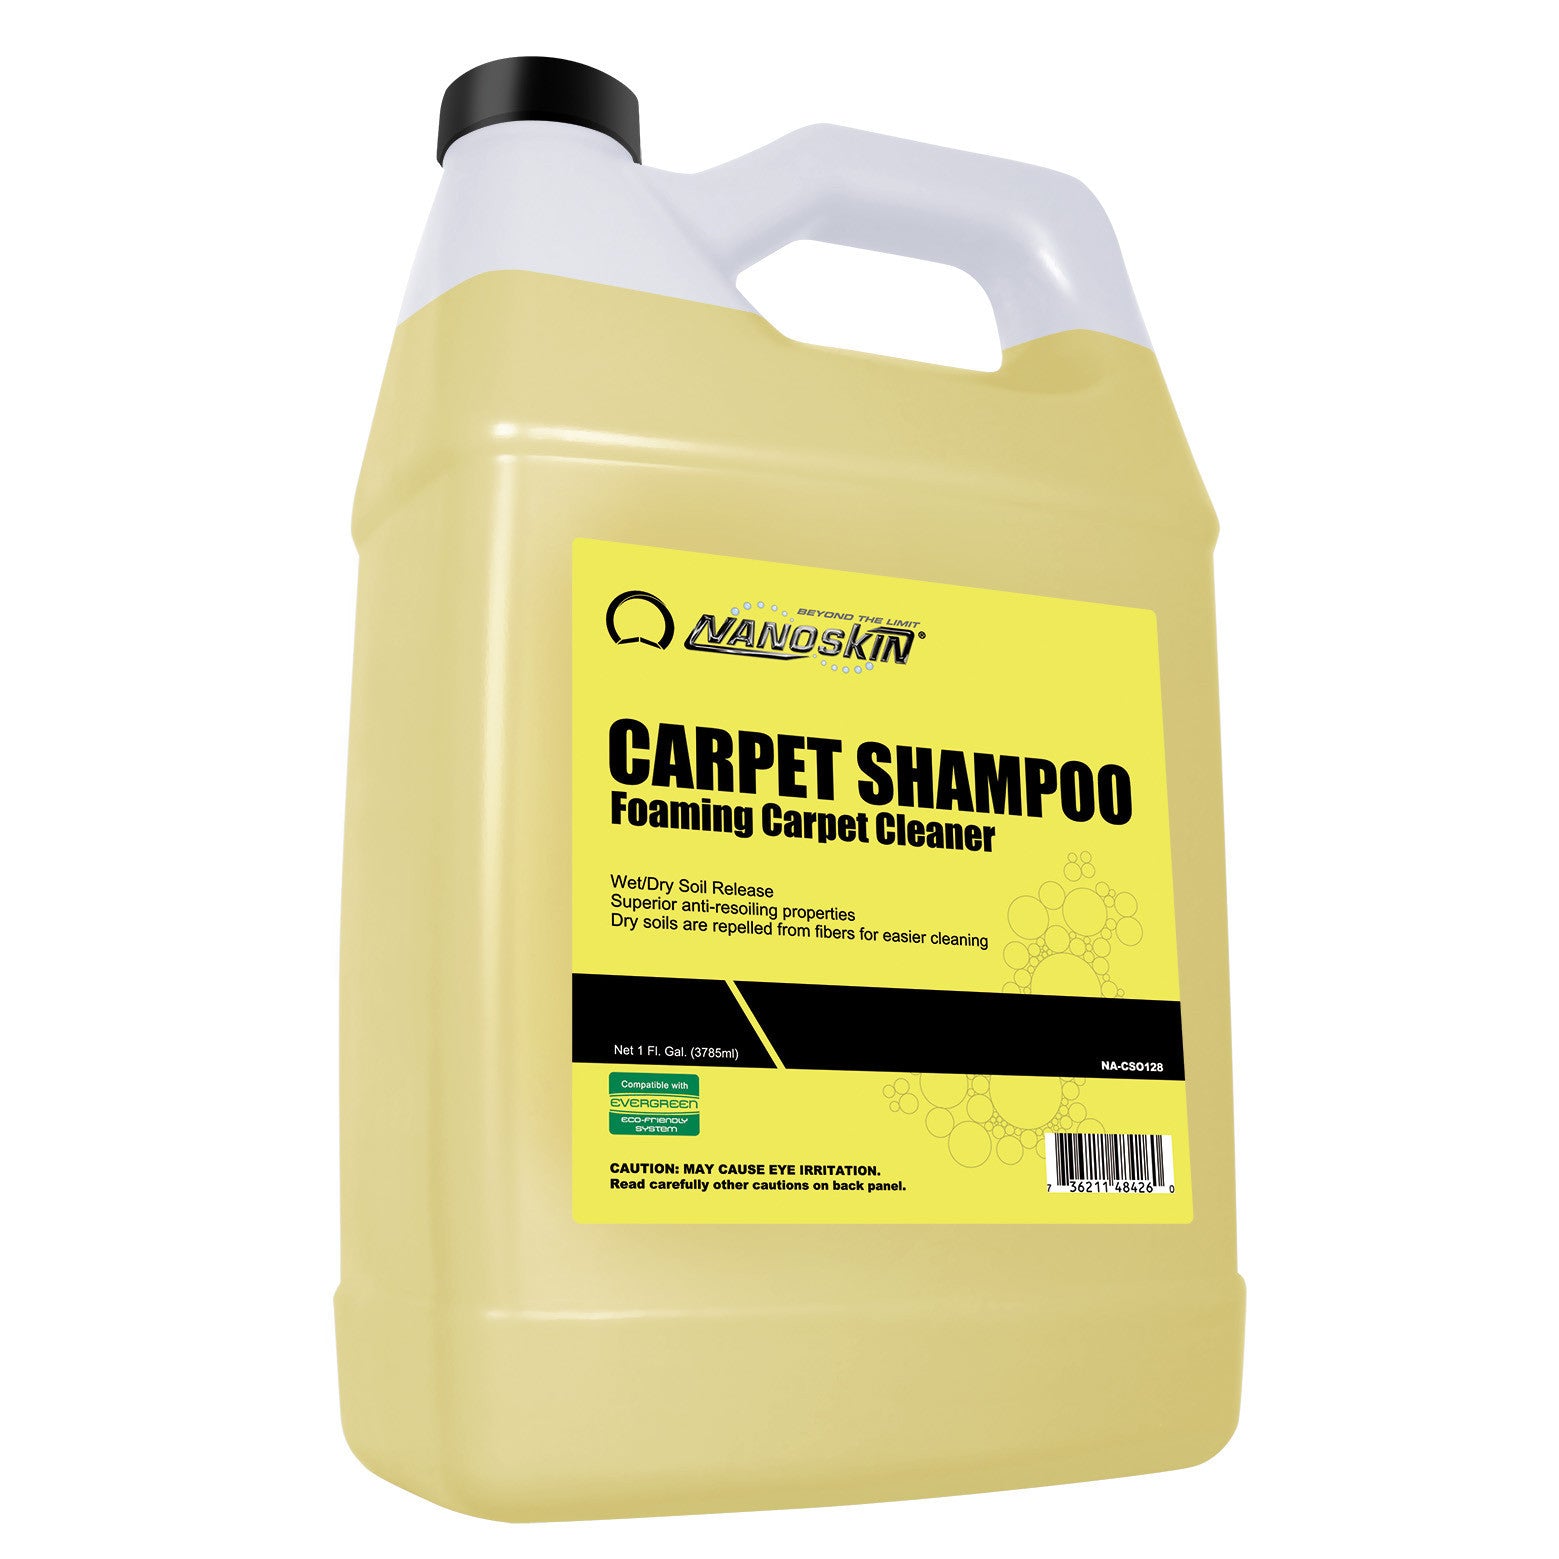 CARPET SHAMPOO Foaming Carpet Shampoo 19:1 – NANOSKIN Car Care Products